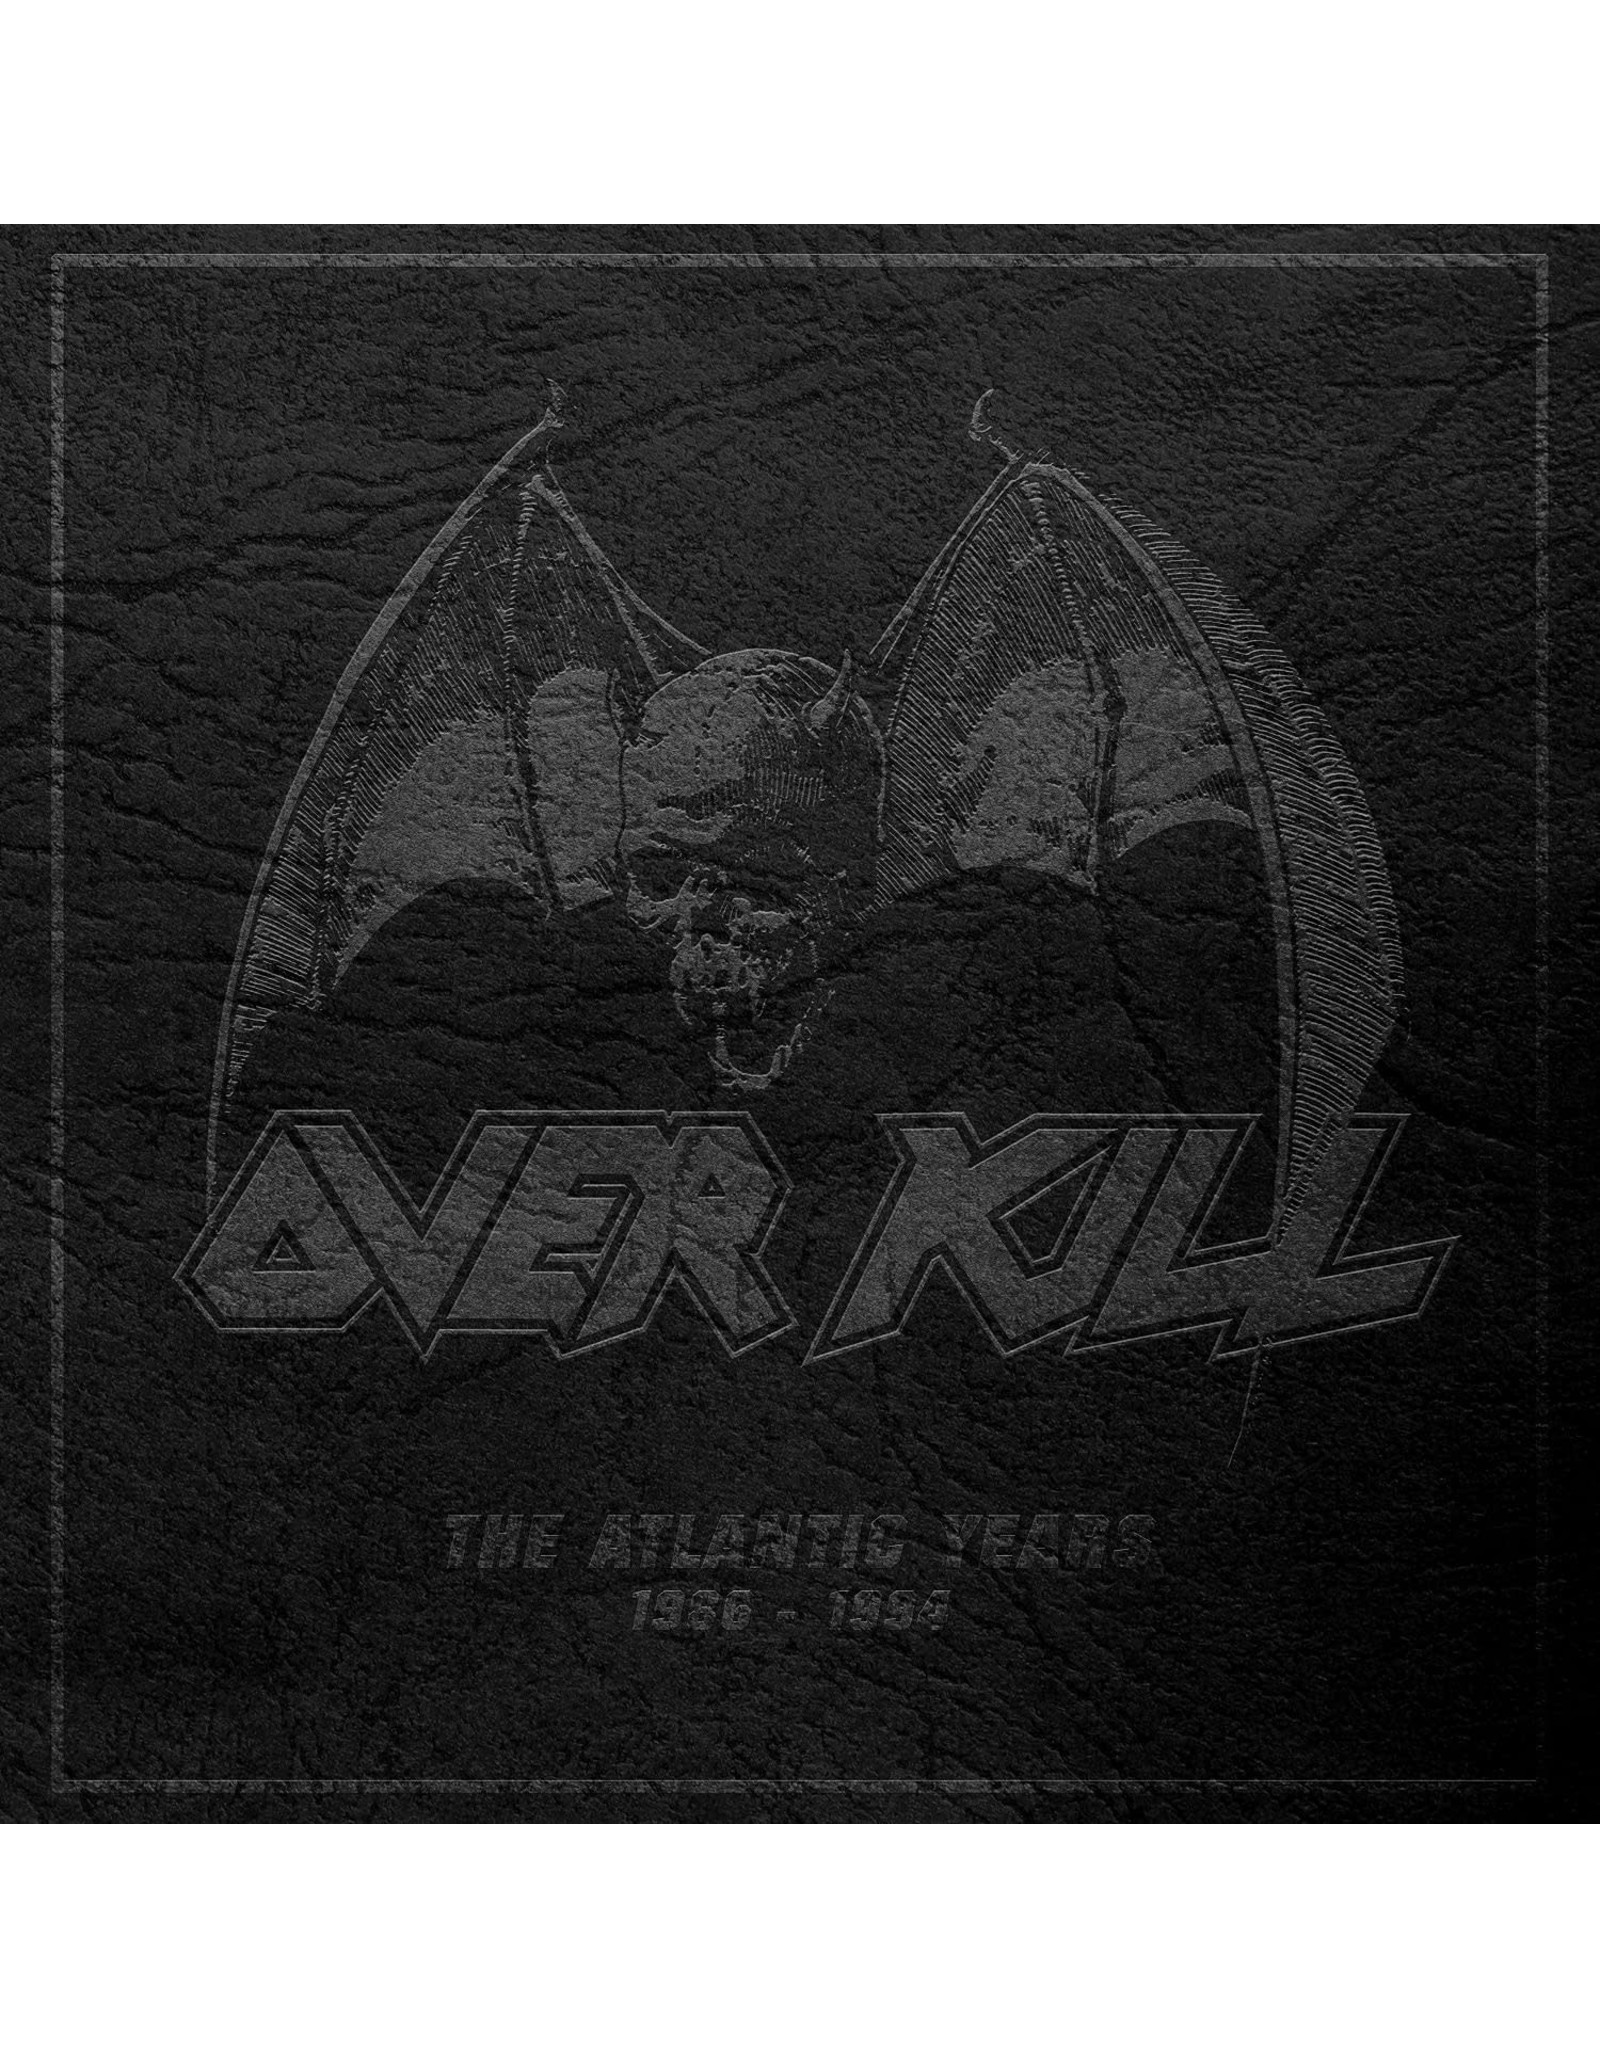 Overkill - The Atlantic Years 1986-1994 6LP Boxset